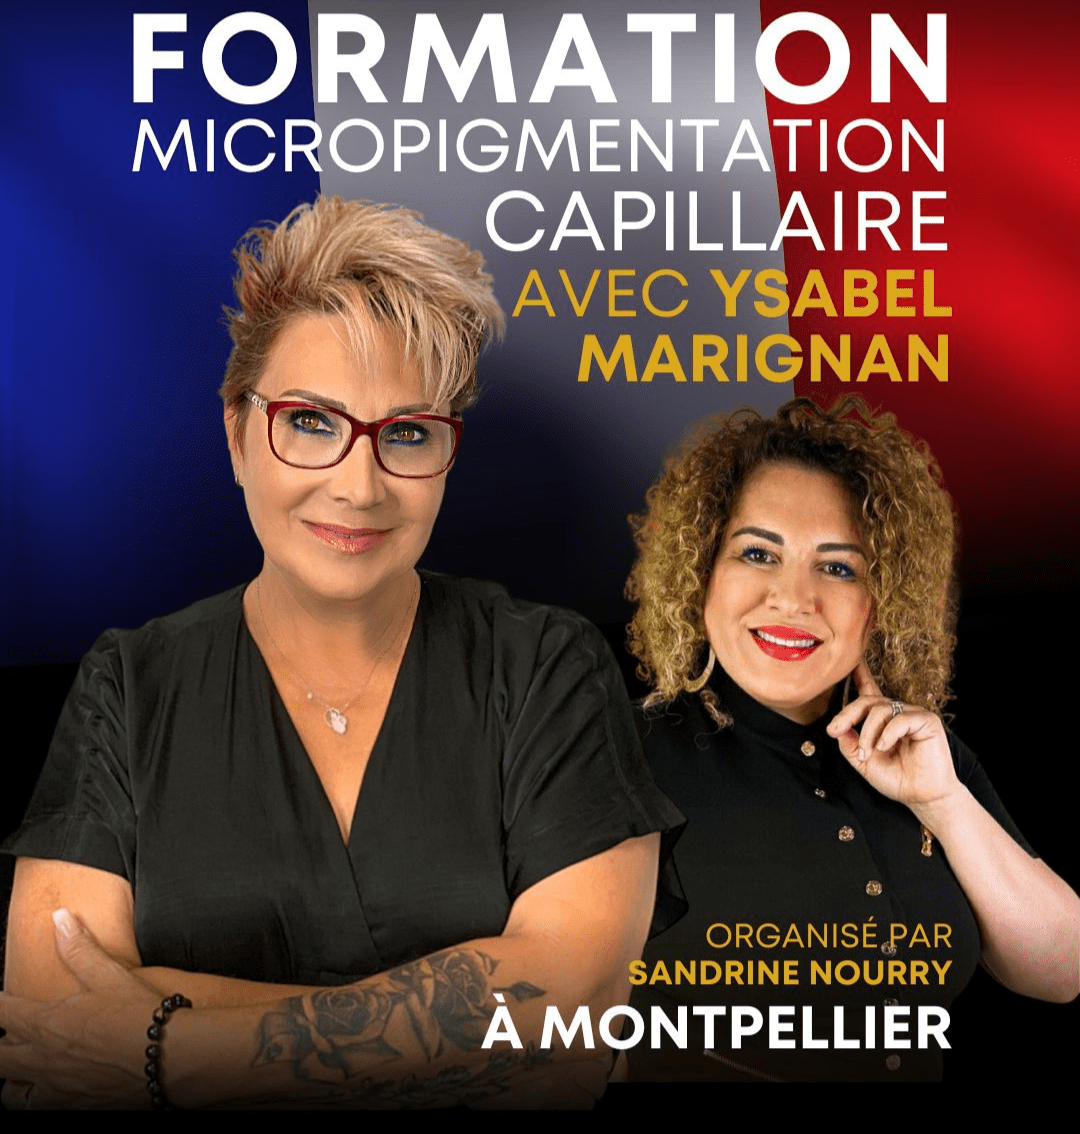 Formation-Micropigmentation-capillaire-a-Montpellier-France-par-Ysabel-Marignan-et-Sandrine-Nourry-Sviatoacademy